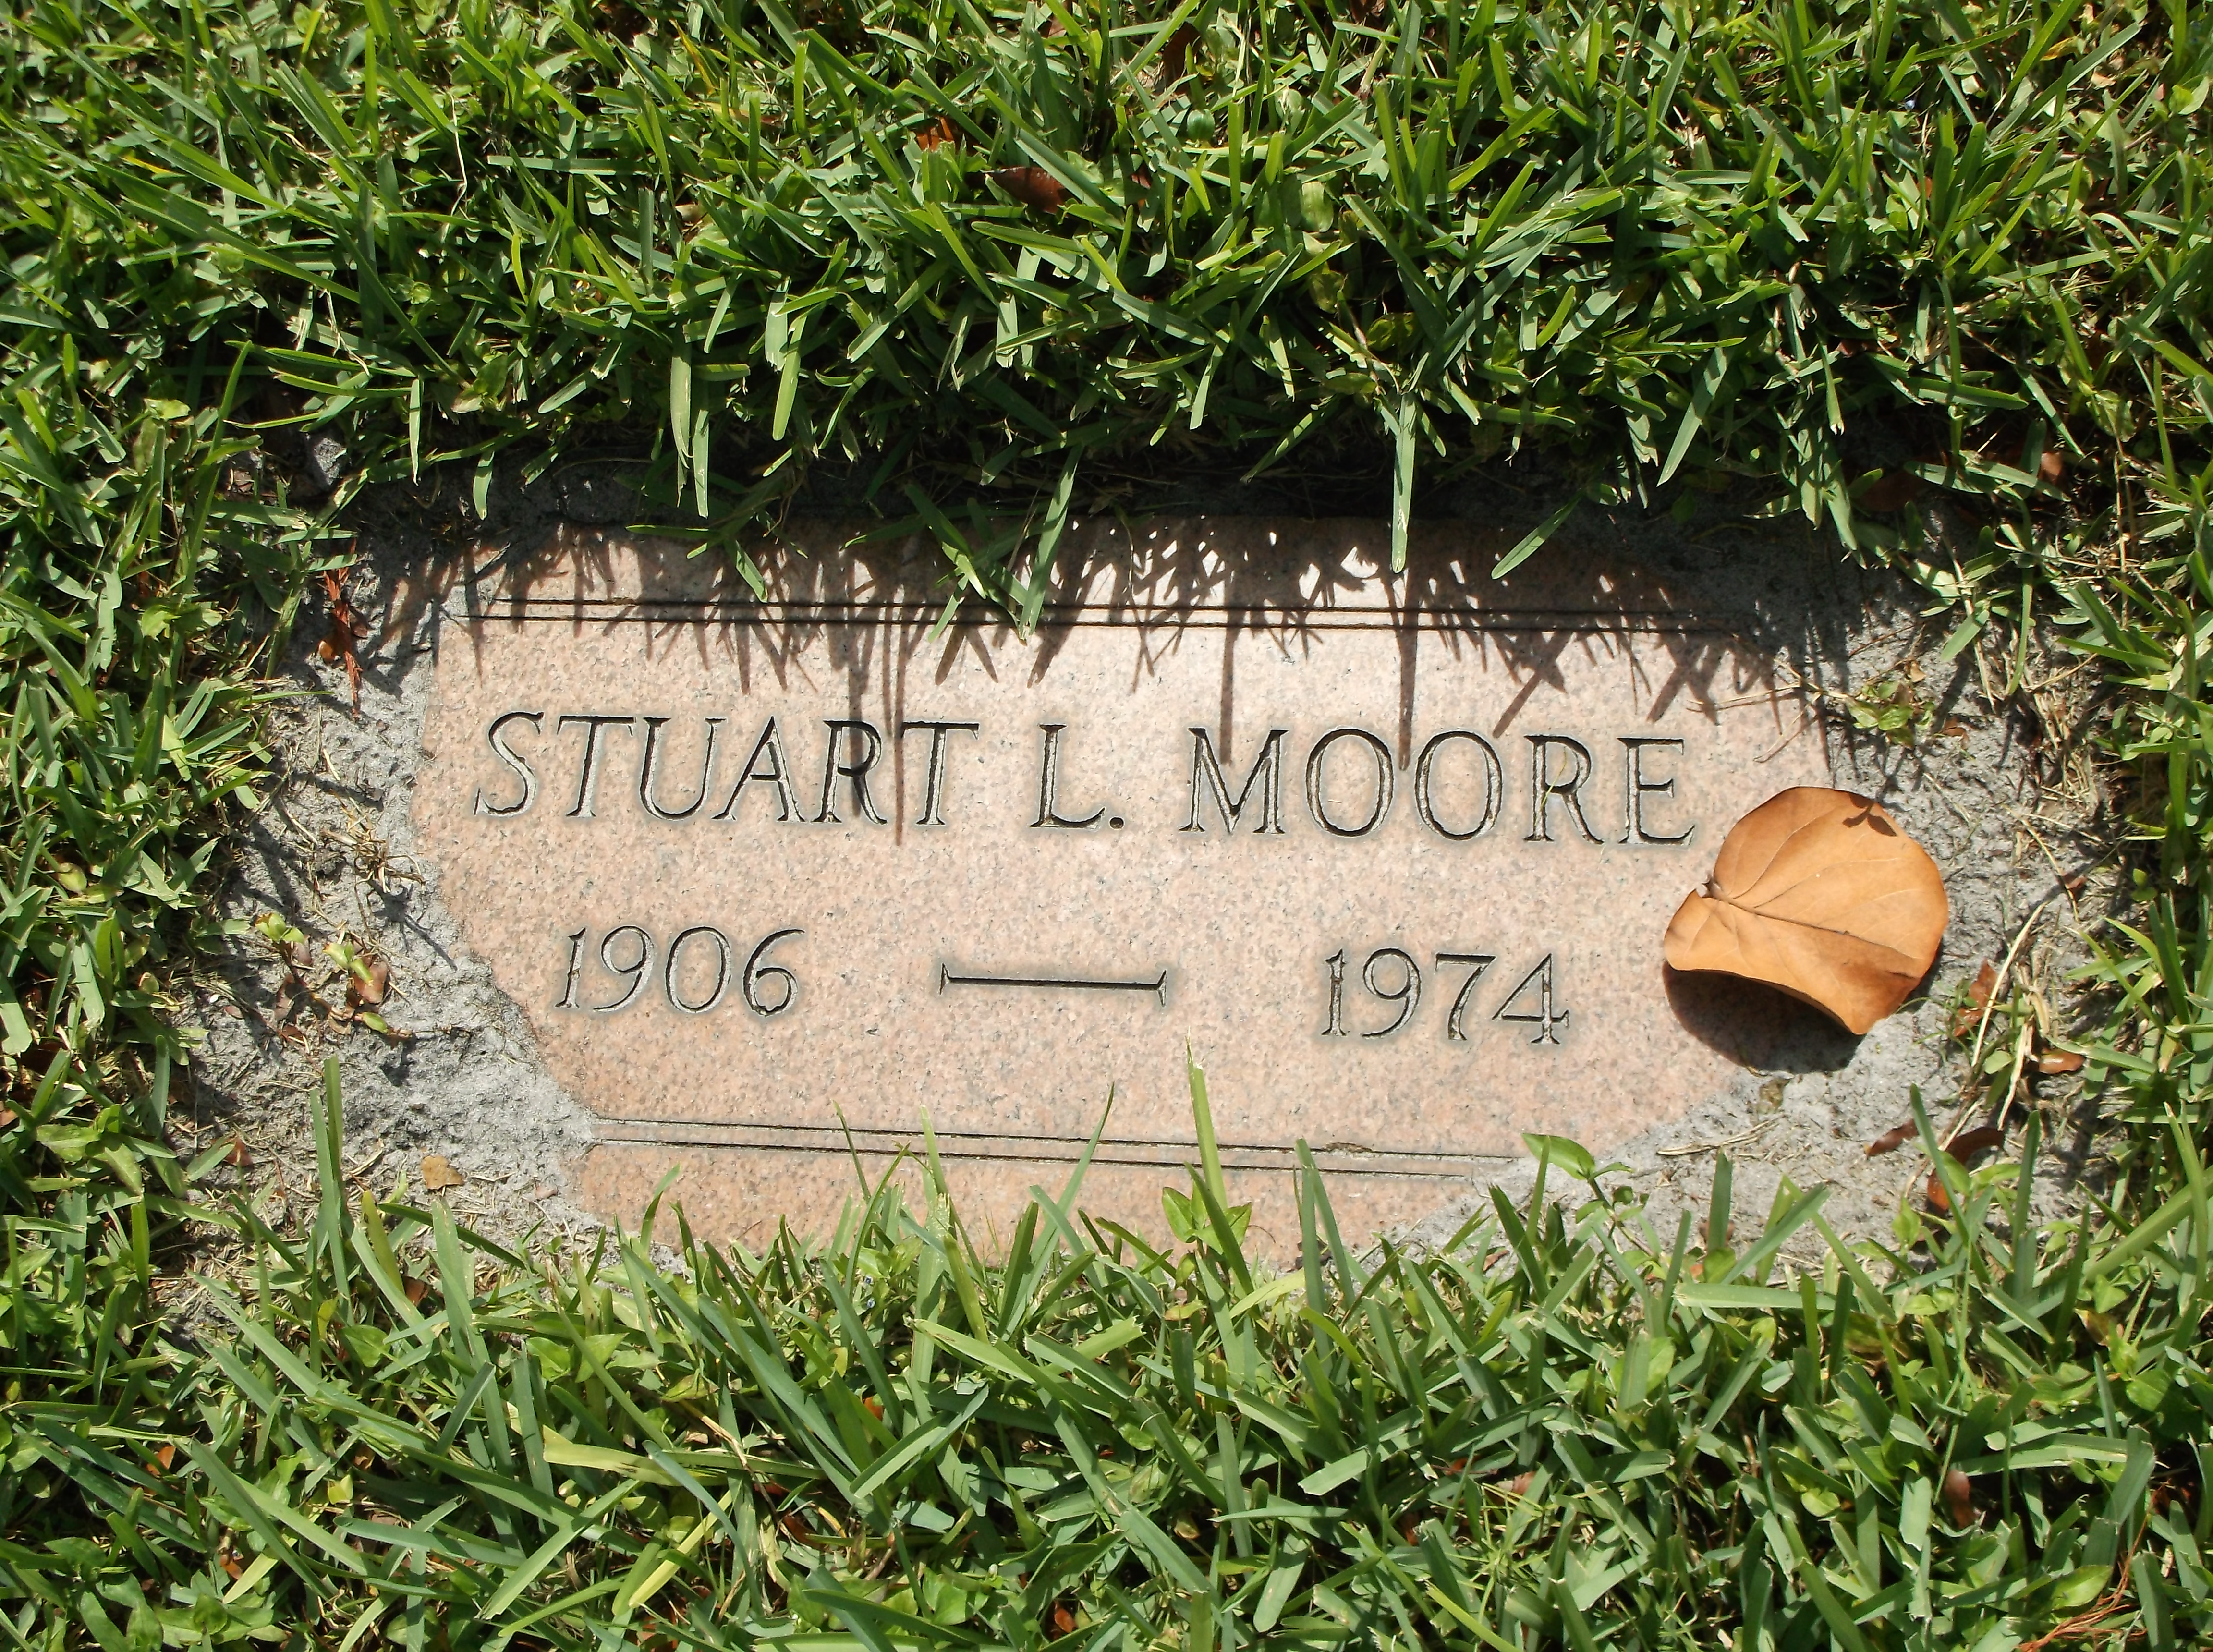 Stuart L Moore